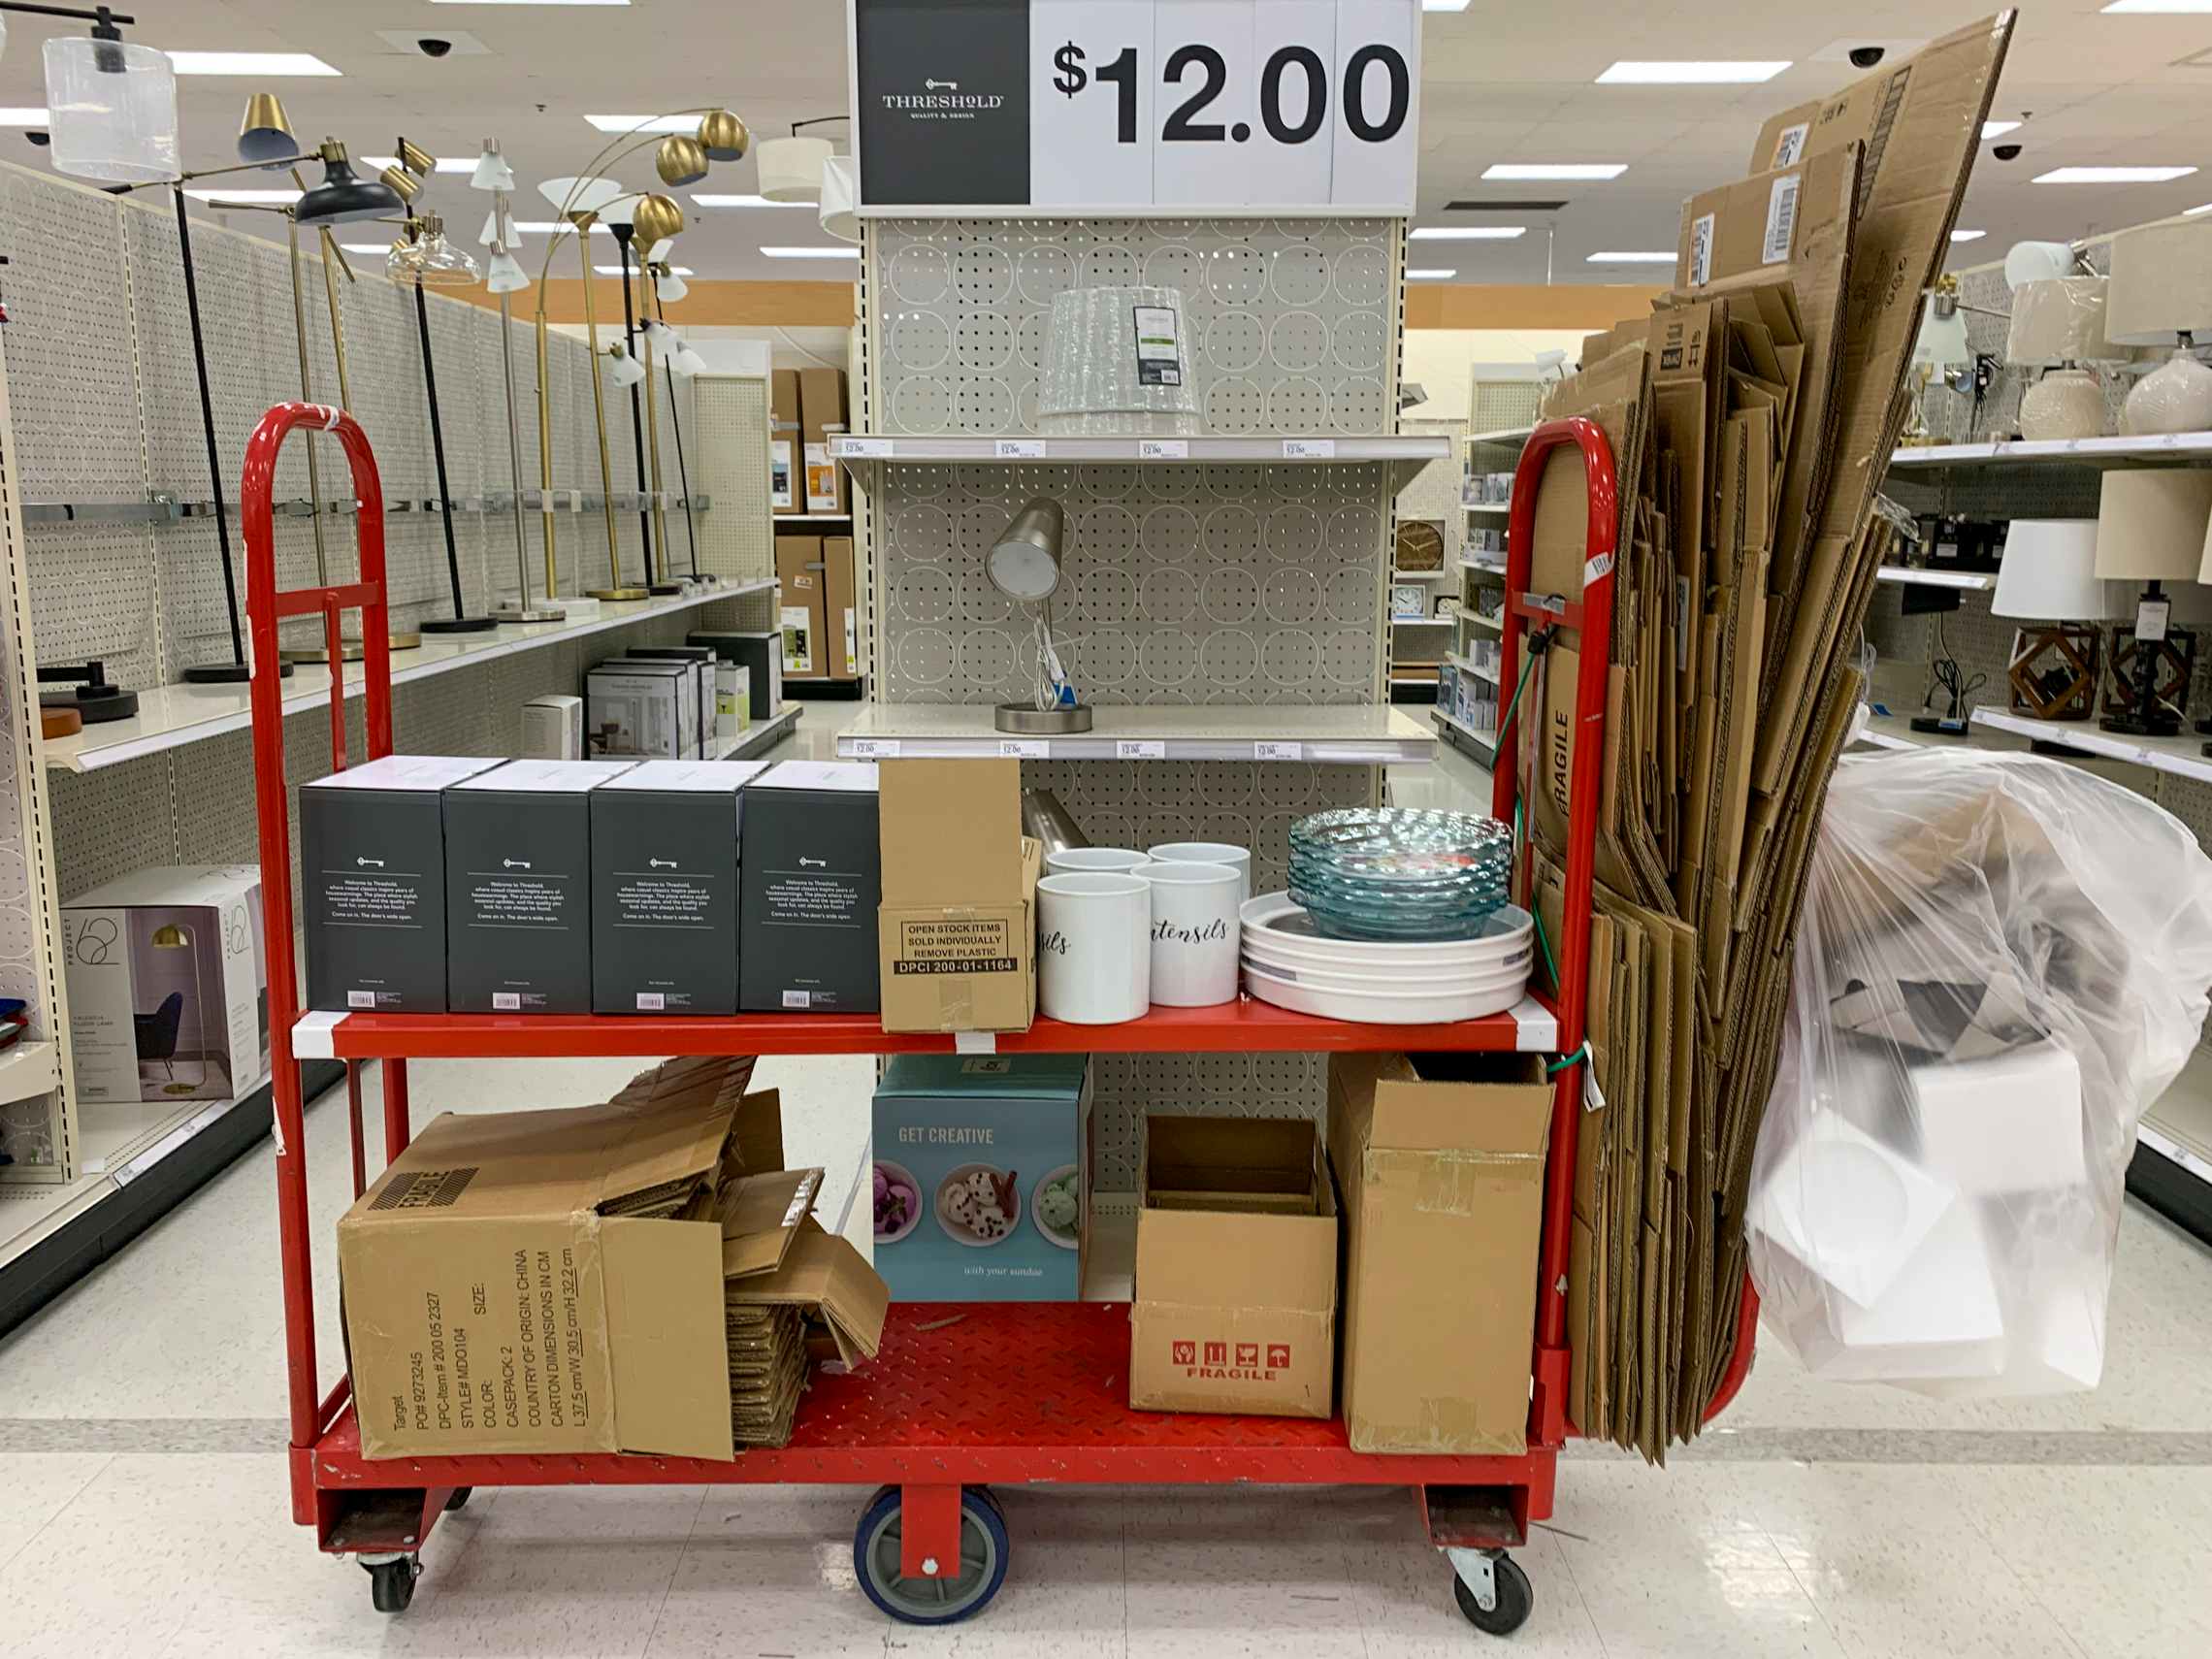 Cardboard boxes on a cart inside Target.